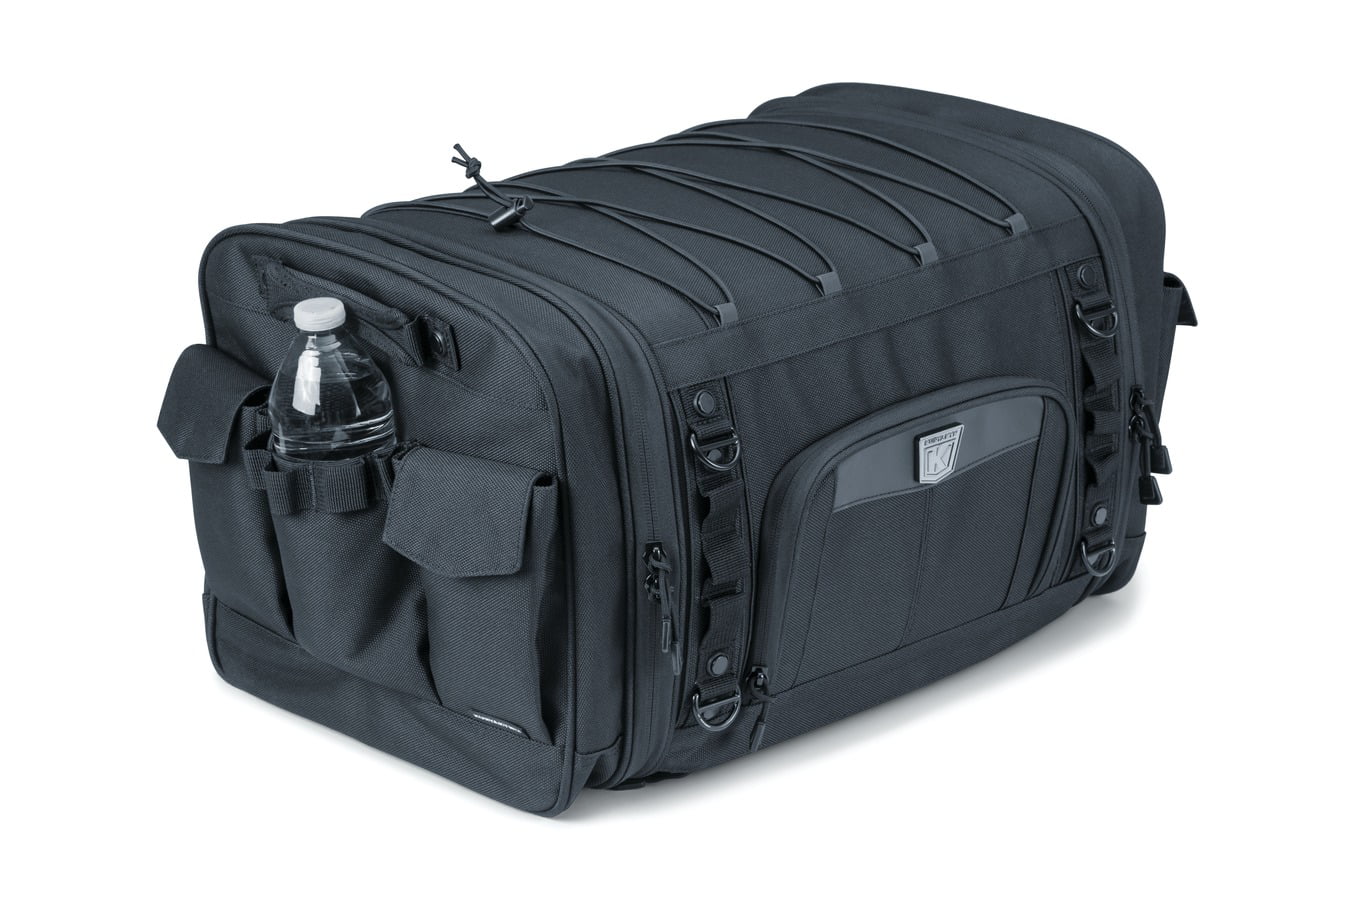 Kuryakyn 5285 Momentum Vagabond Motorcycle Travel Luggage Weather Resistant Seat/Trunk/Rack Bag with Sissy Bar Straps Black